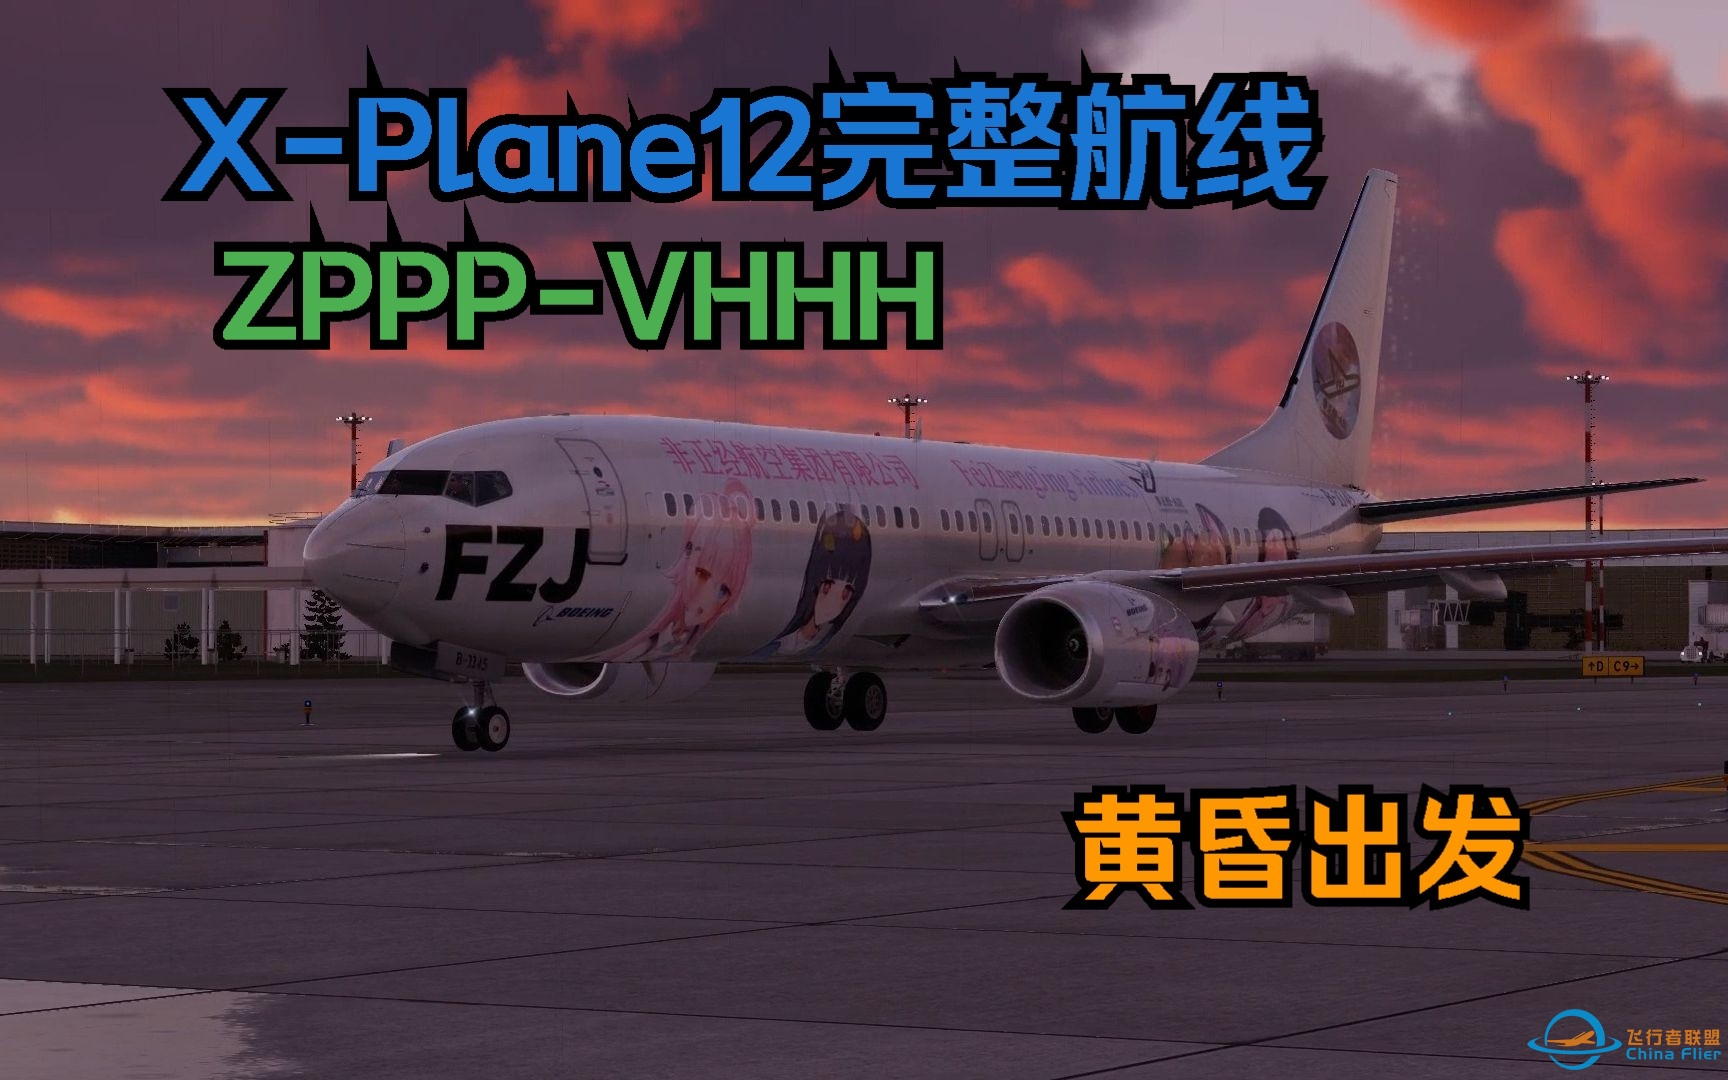 XPlane12完整航线：昆明-香港，欣赏极致夜景-3869 